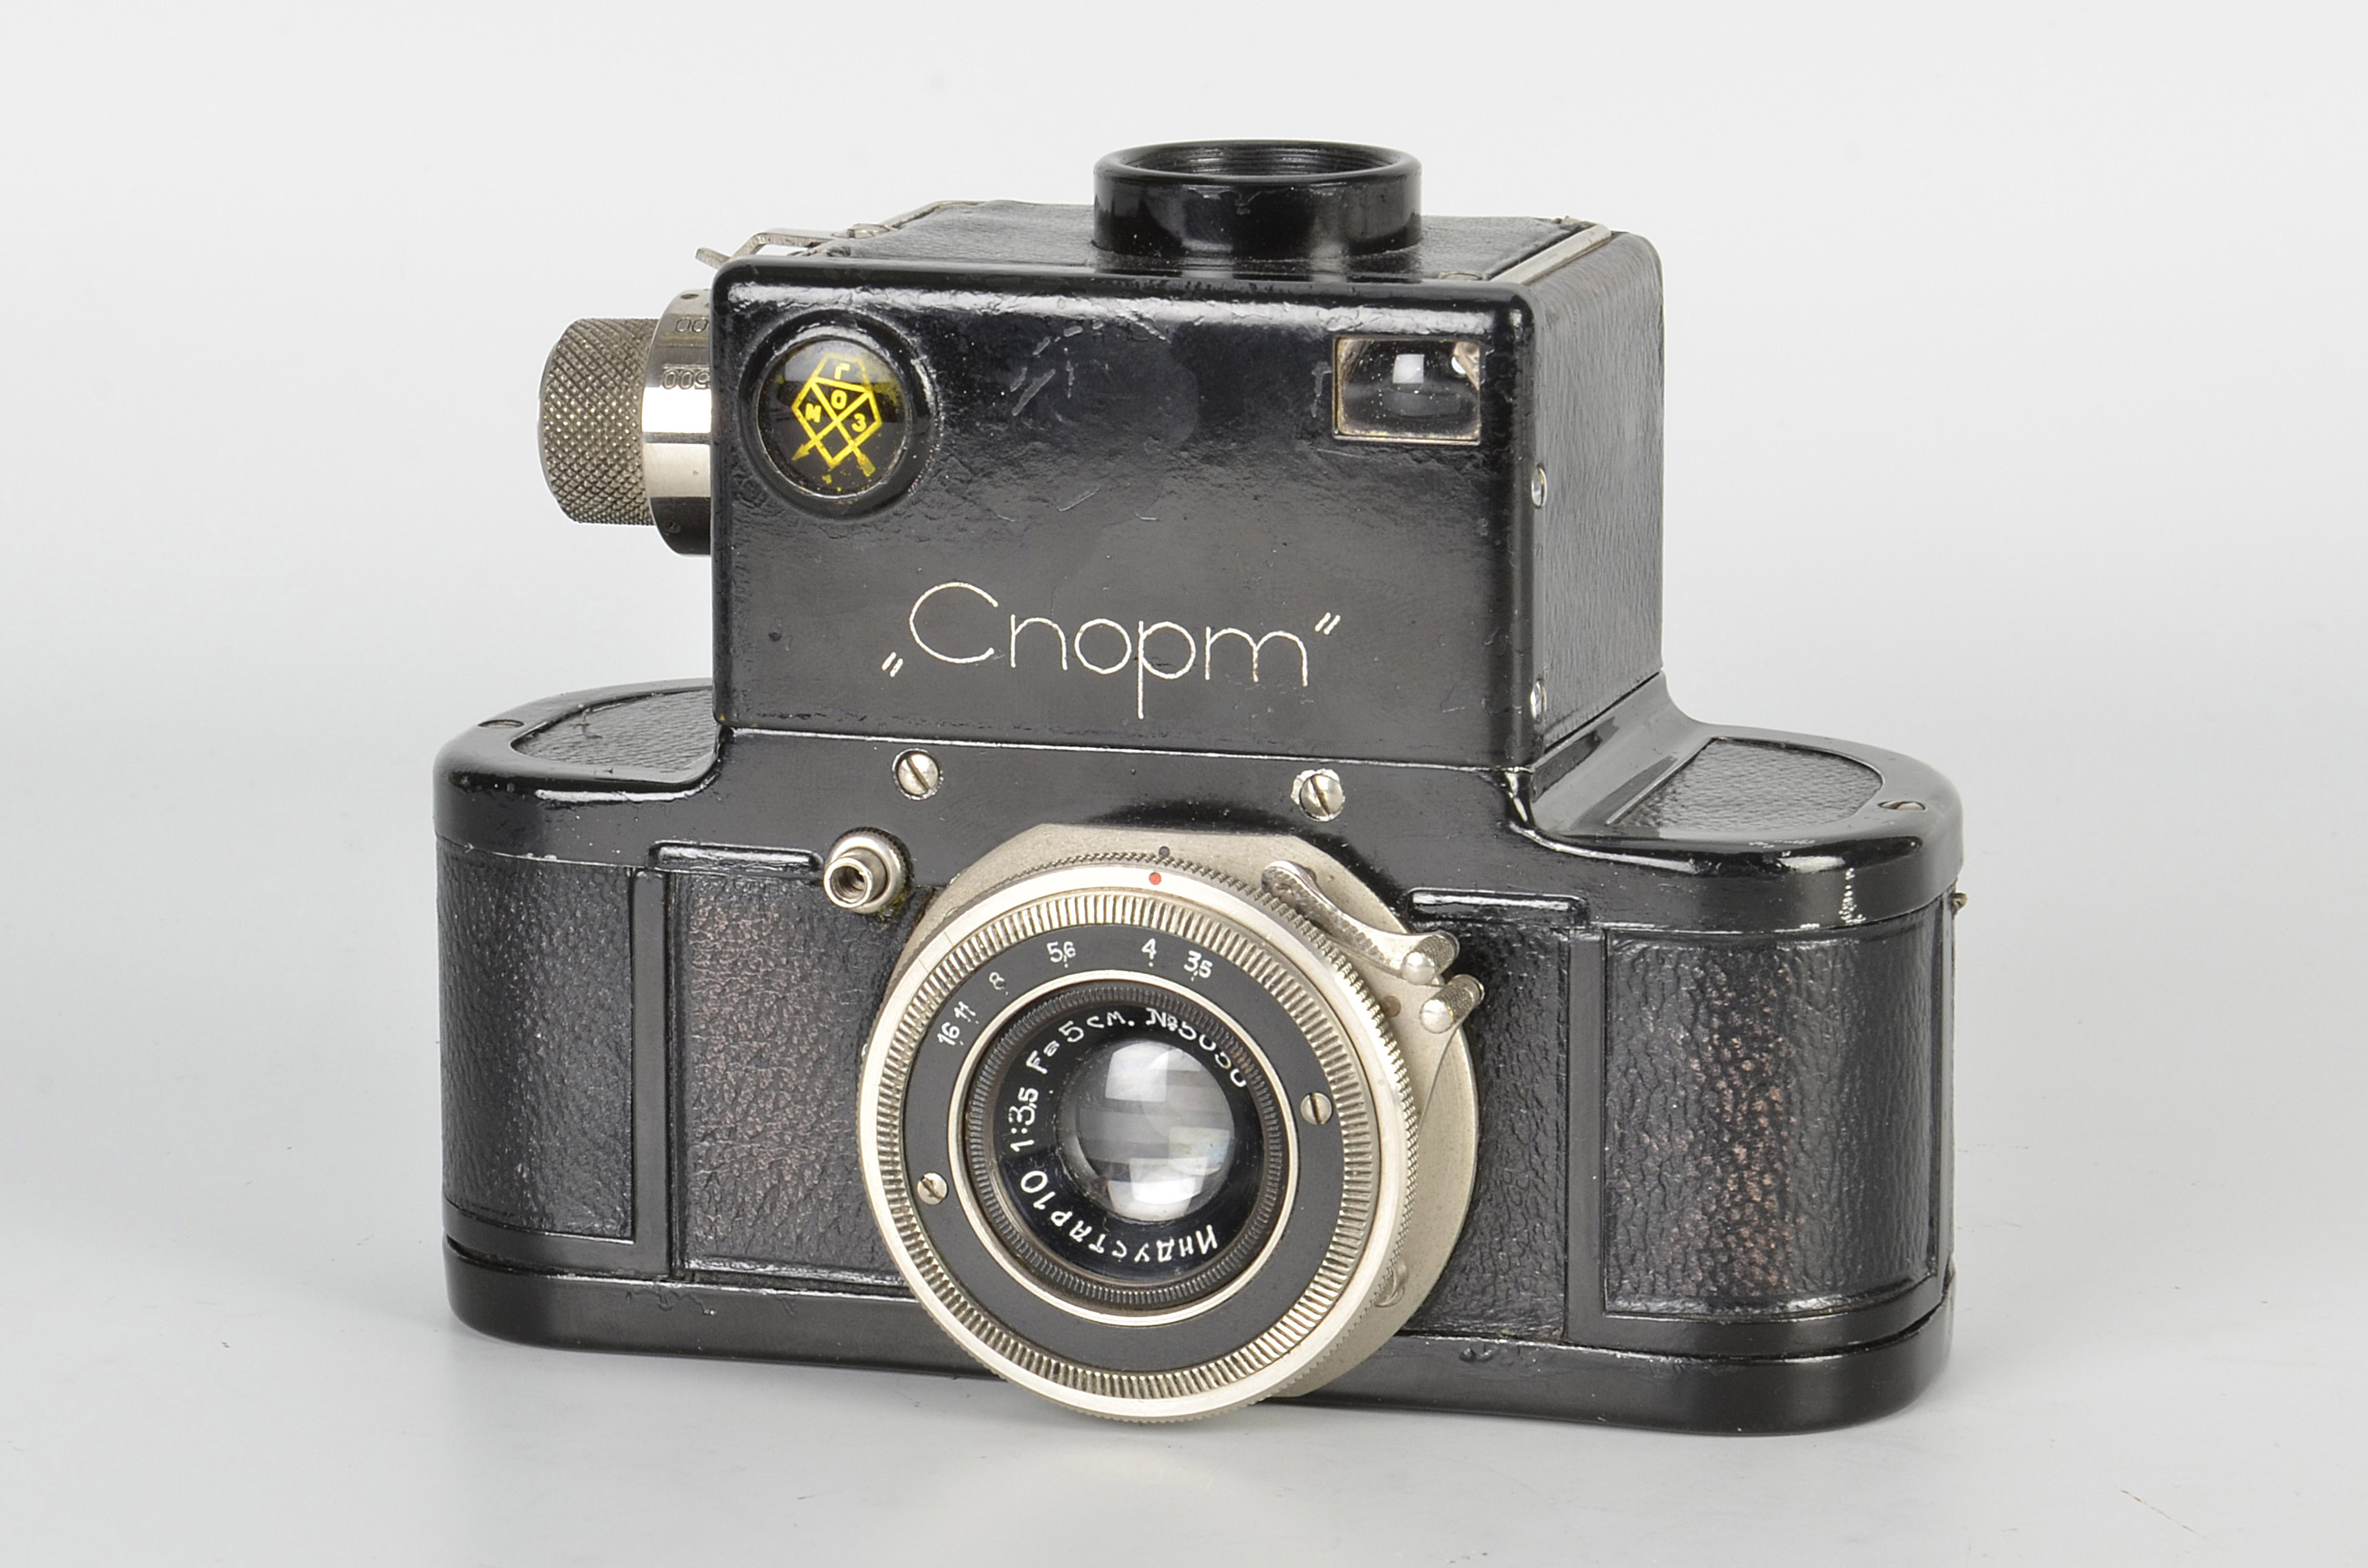 A Gomz Sport Camera, black, with Industar-10 f/3.5 35mm lens, serial no. 5050, body, G, shutter